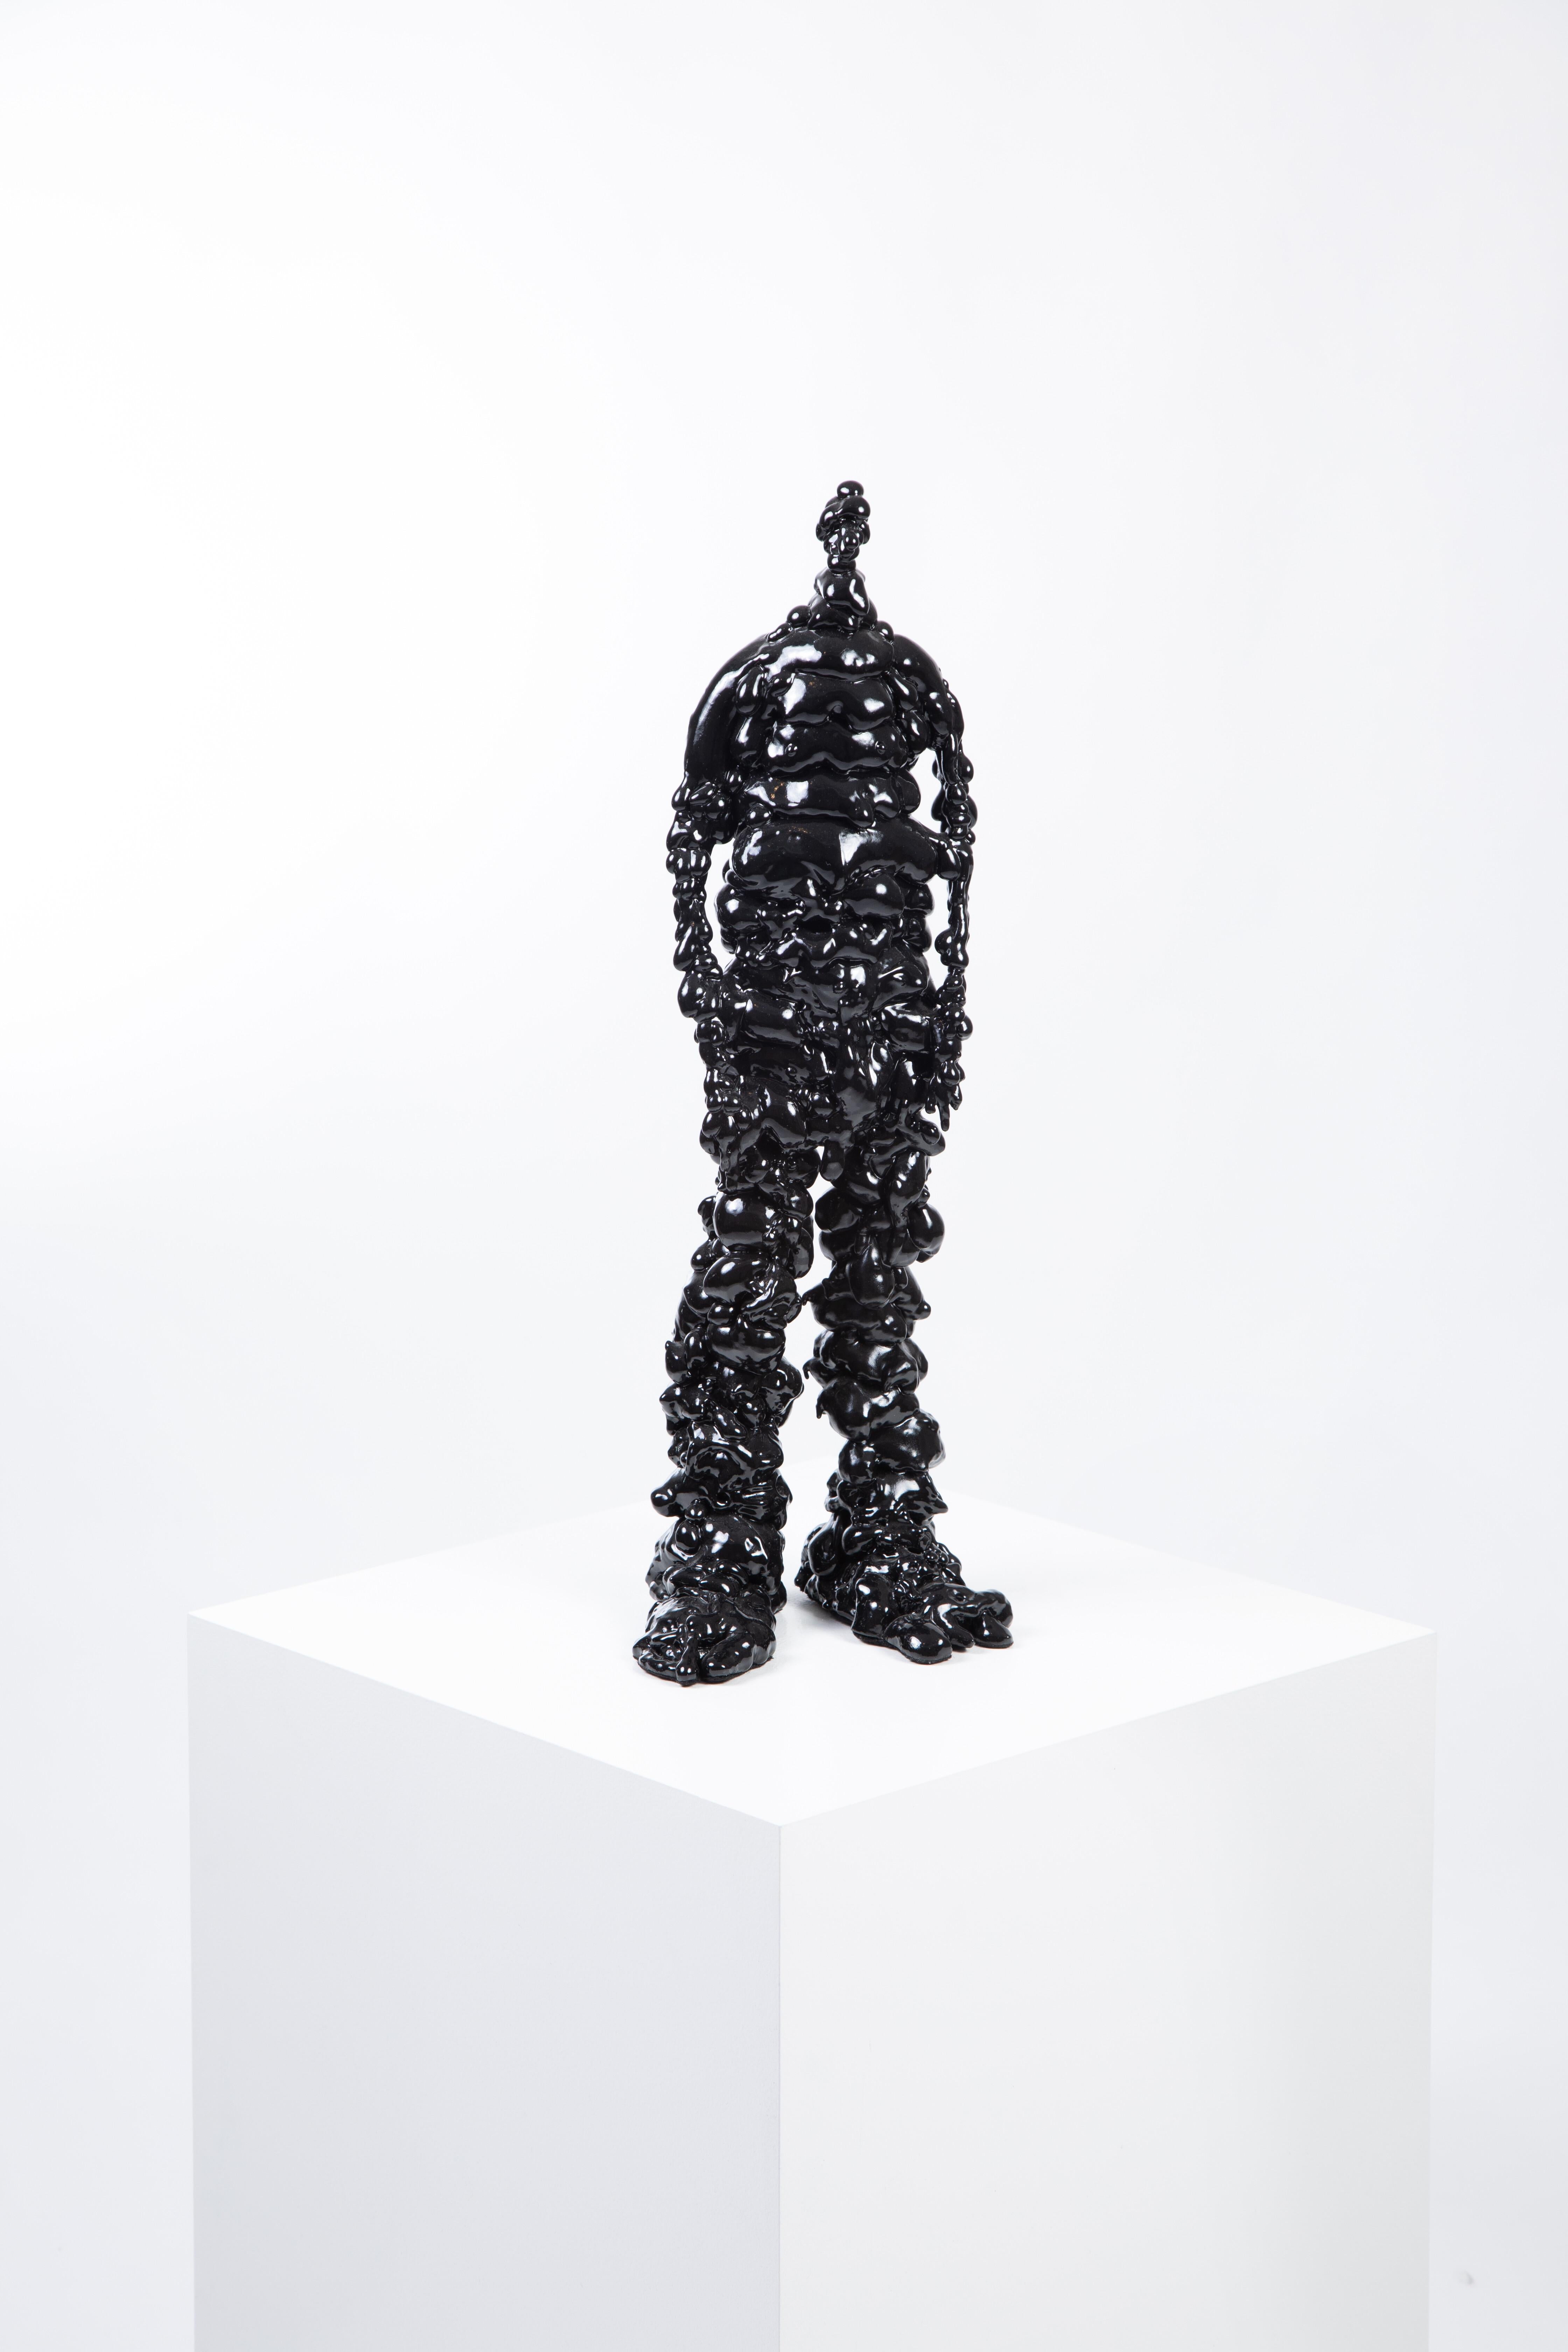 Tom Friedman Figurative Sculpture - Black and White 